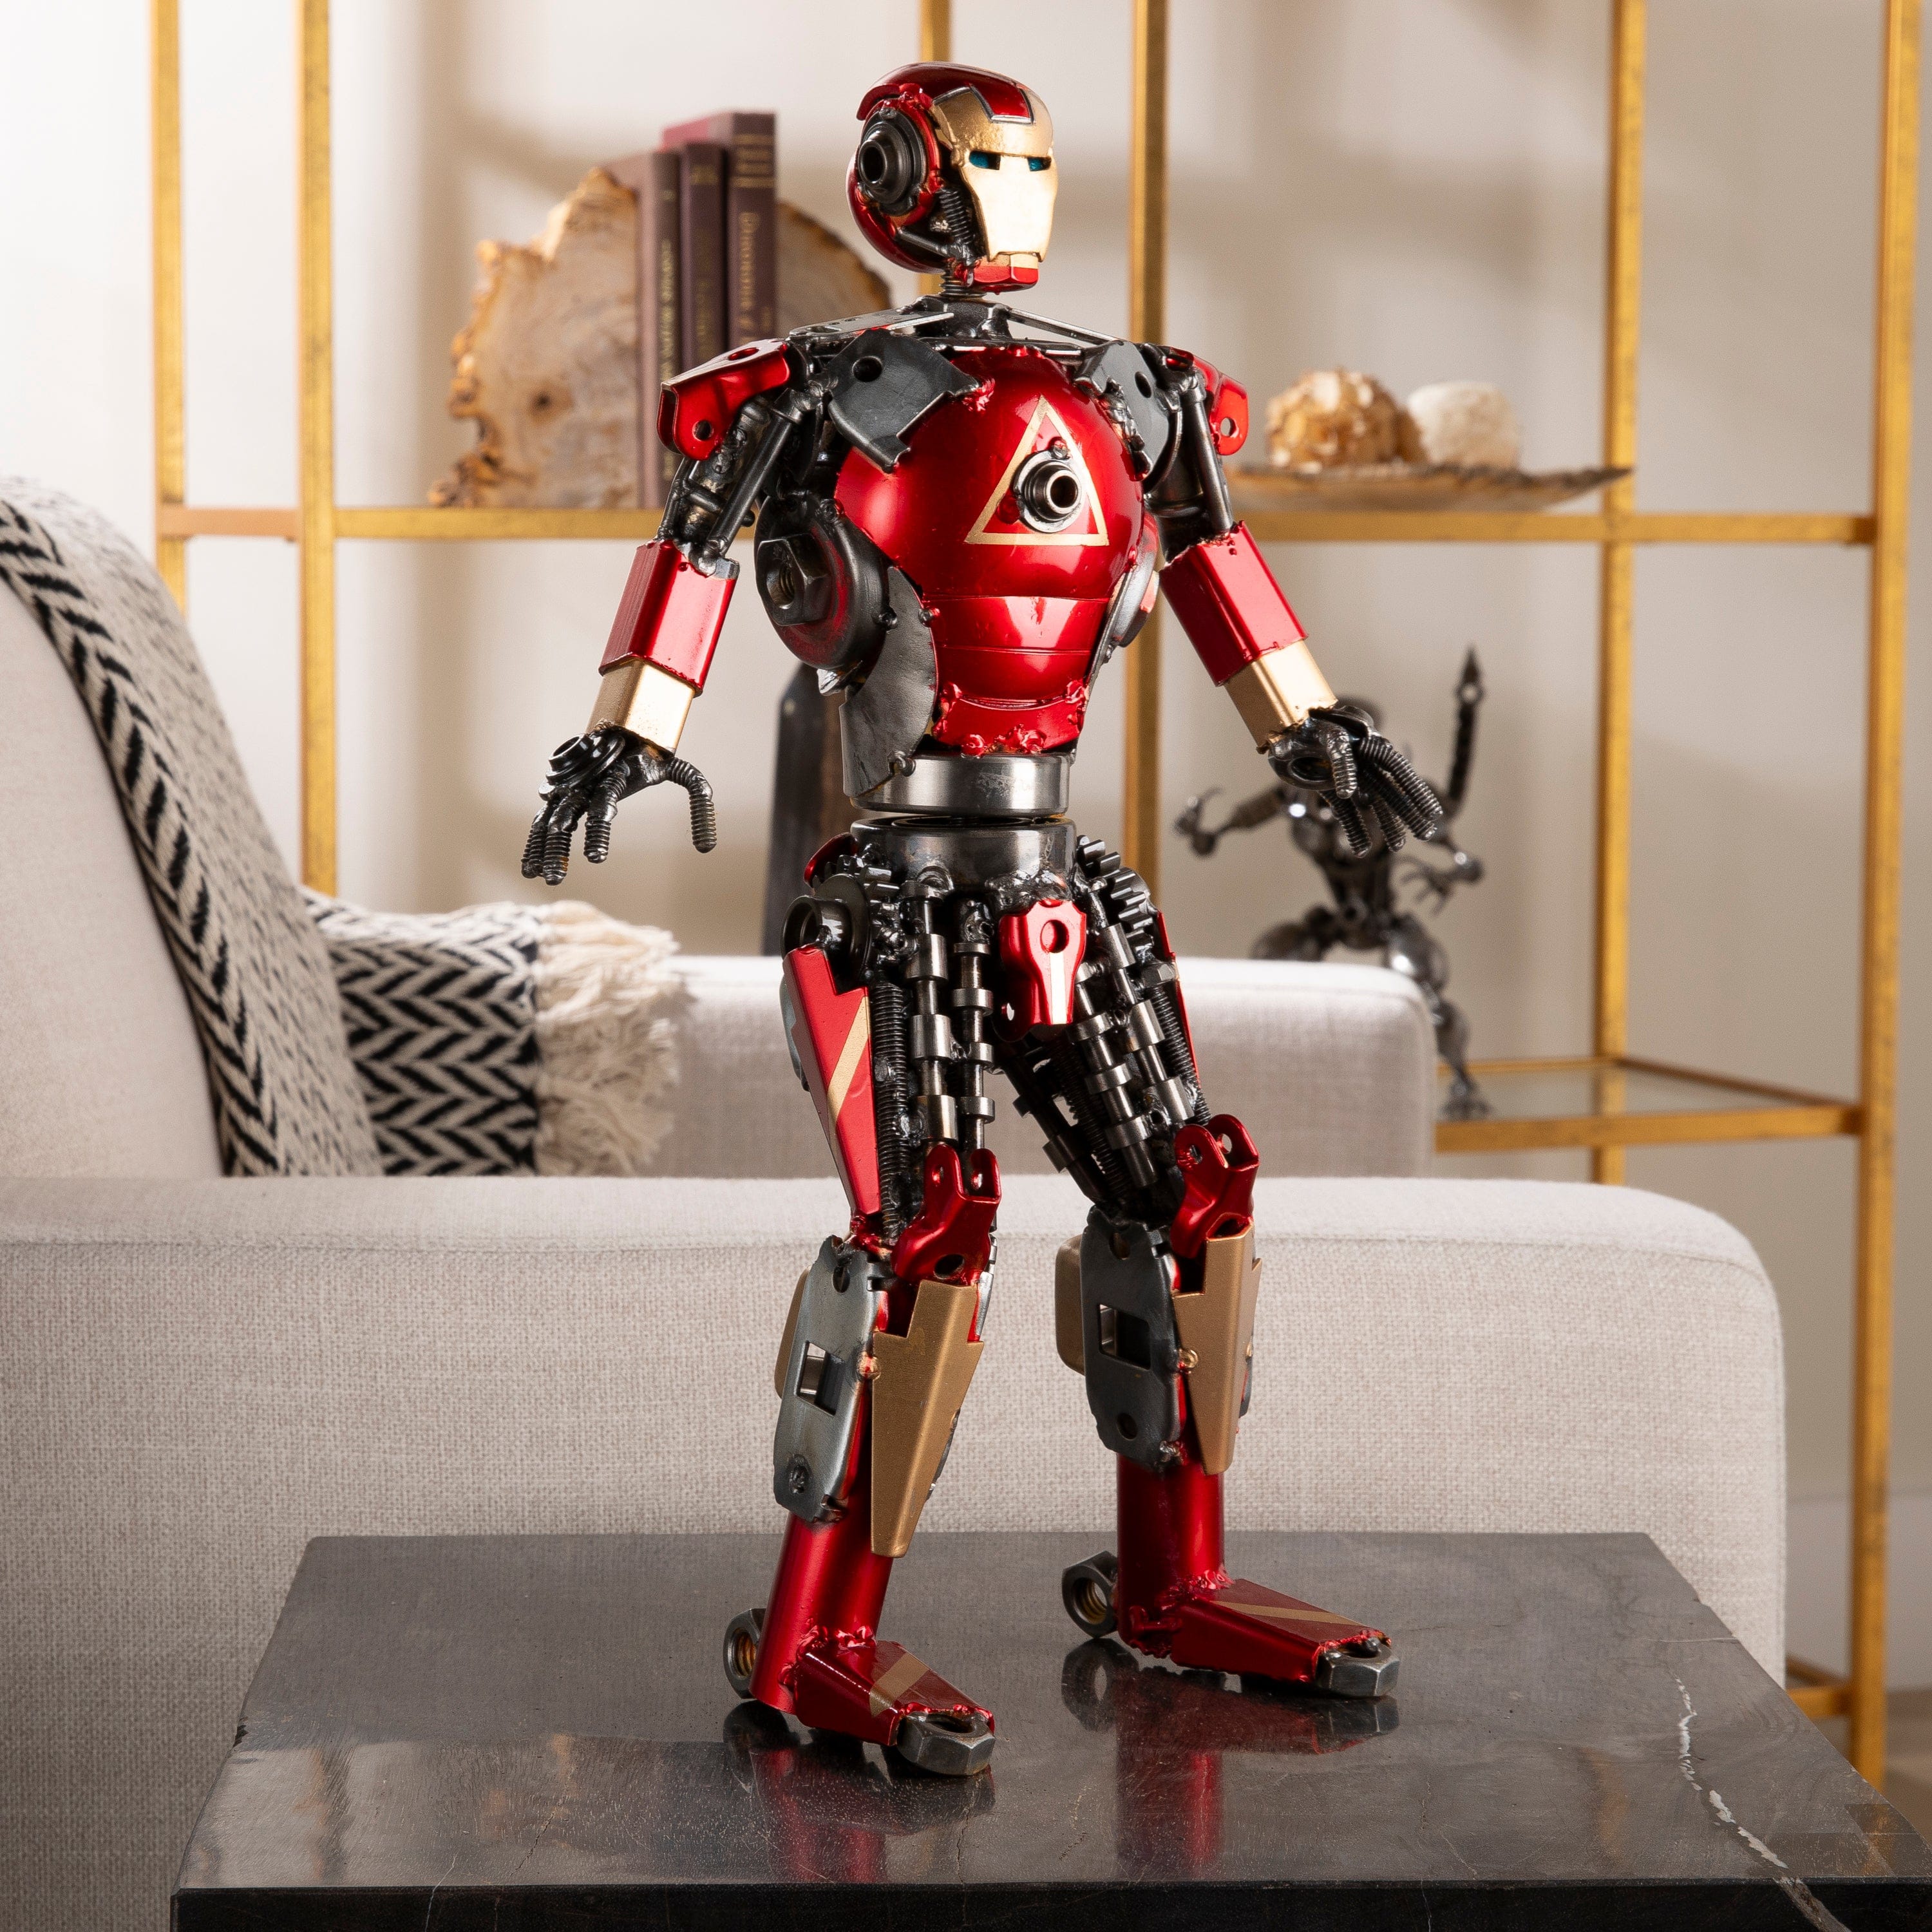 Kalifano Recycled Metal Art 16" Iron Man Inspired Recycled Metal Art Sculpture RMS-IMR41-S